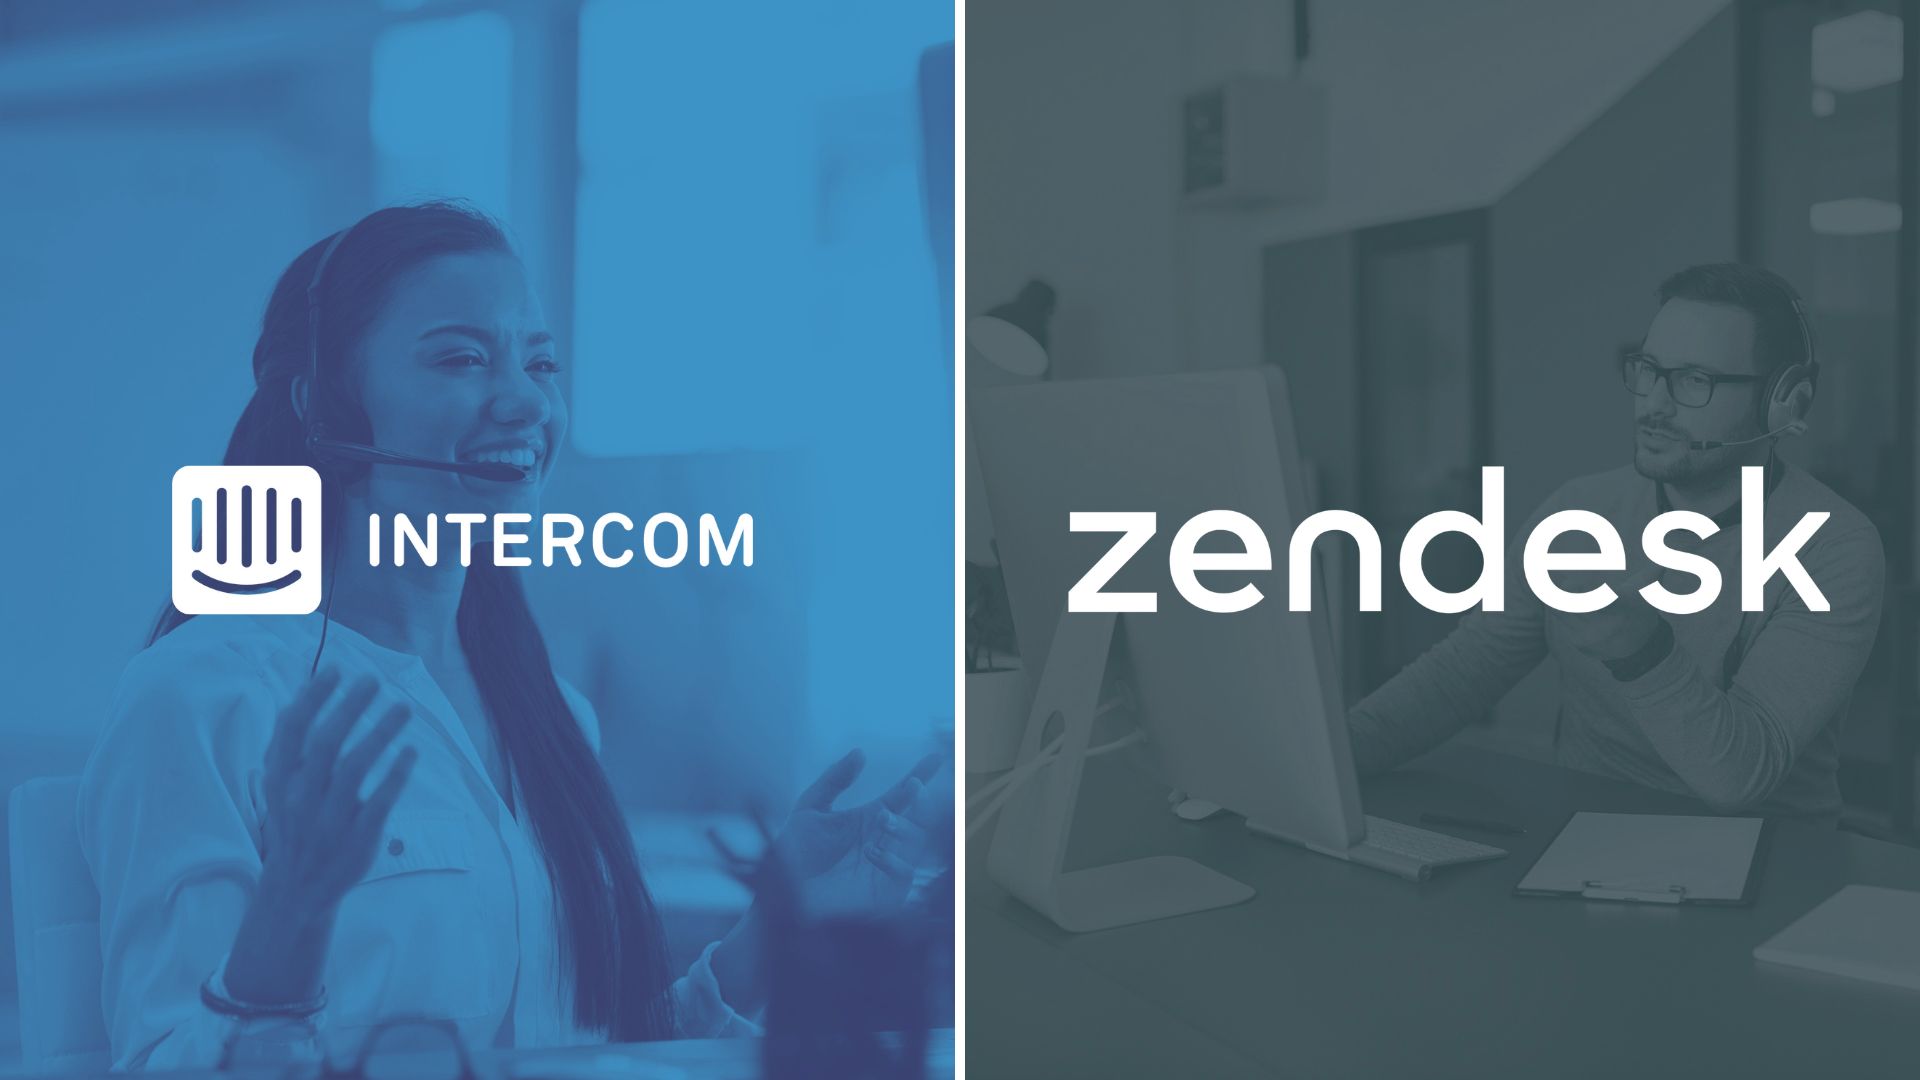 Intercom vs. Zendesk: Which Is Better?